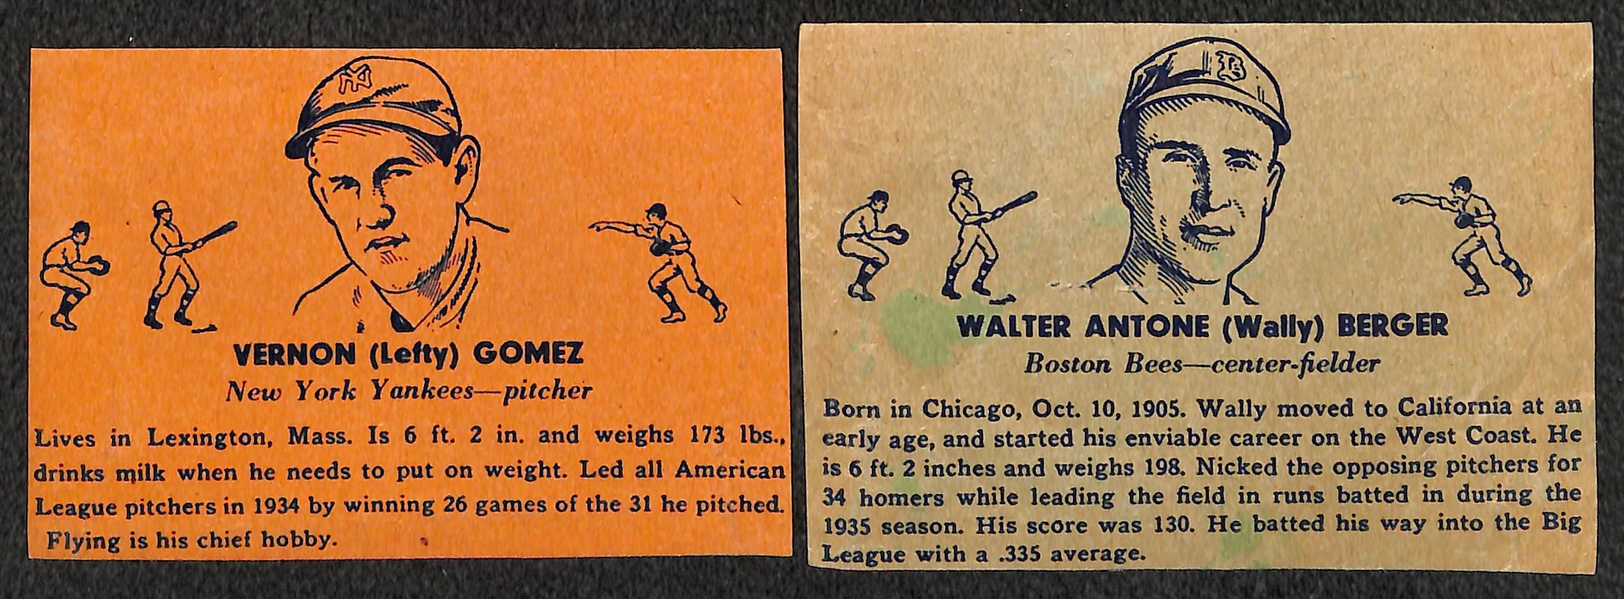 Lot of (6) Hand Cut 1936 Overland Candy (R301) Wrapper Baseball Cards - Appling (HOF), Dickey (HOF), Gomez (HOF), Berger, Ferrell, Cooney